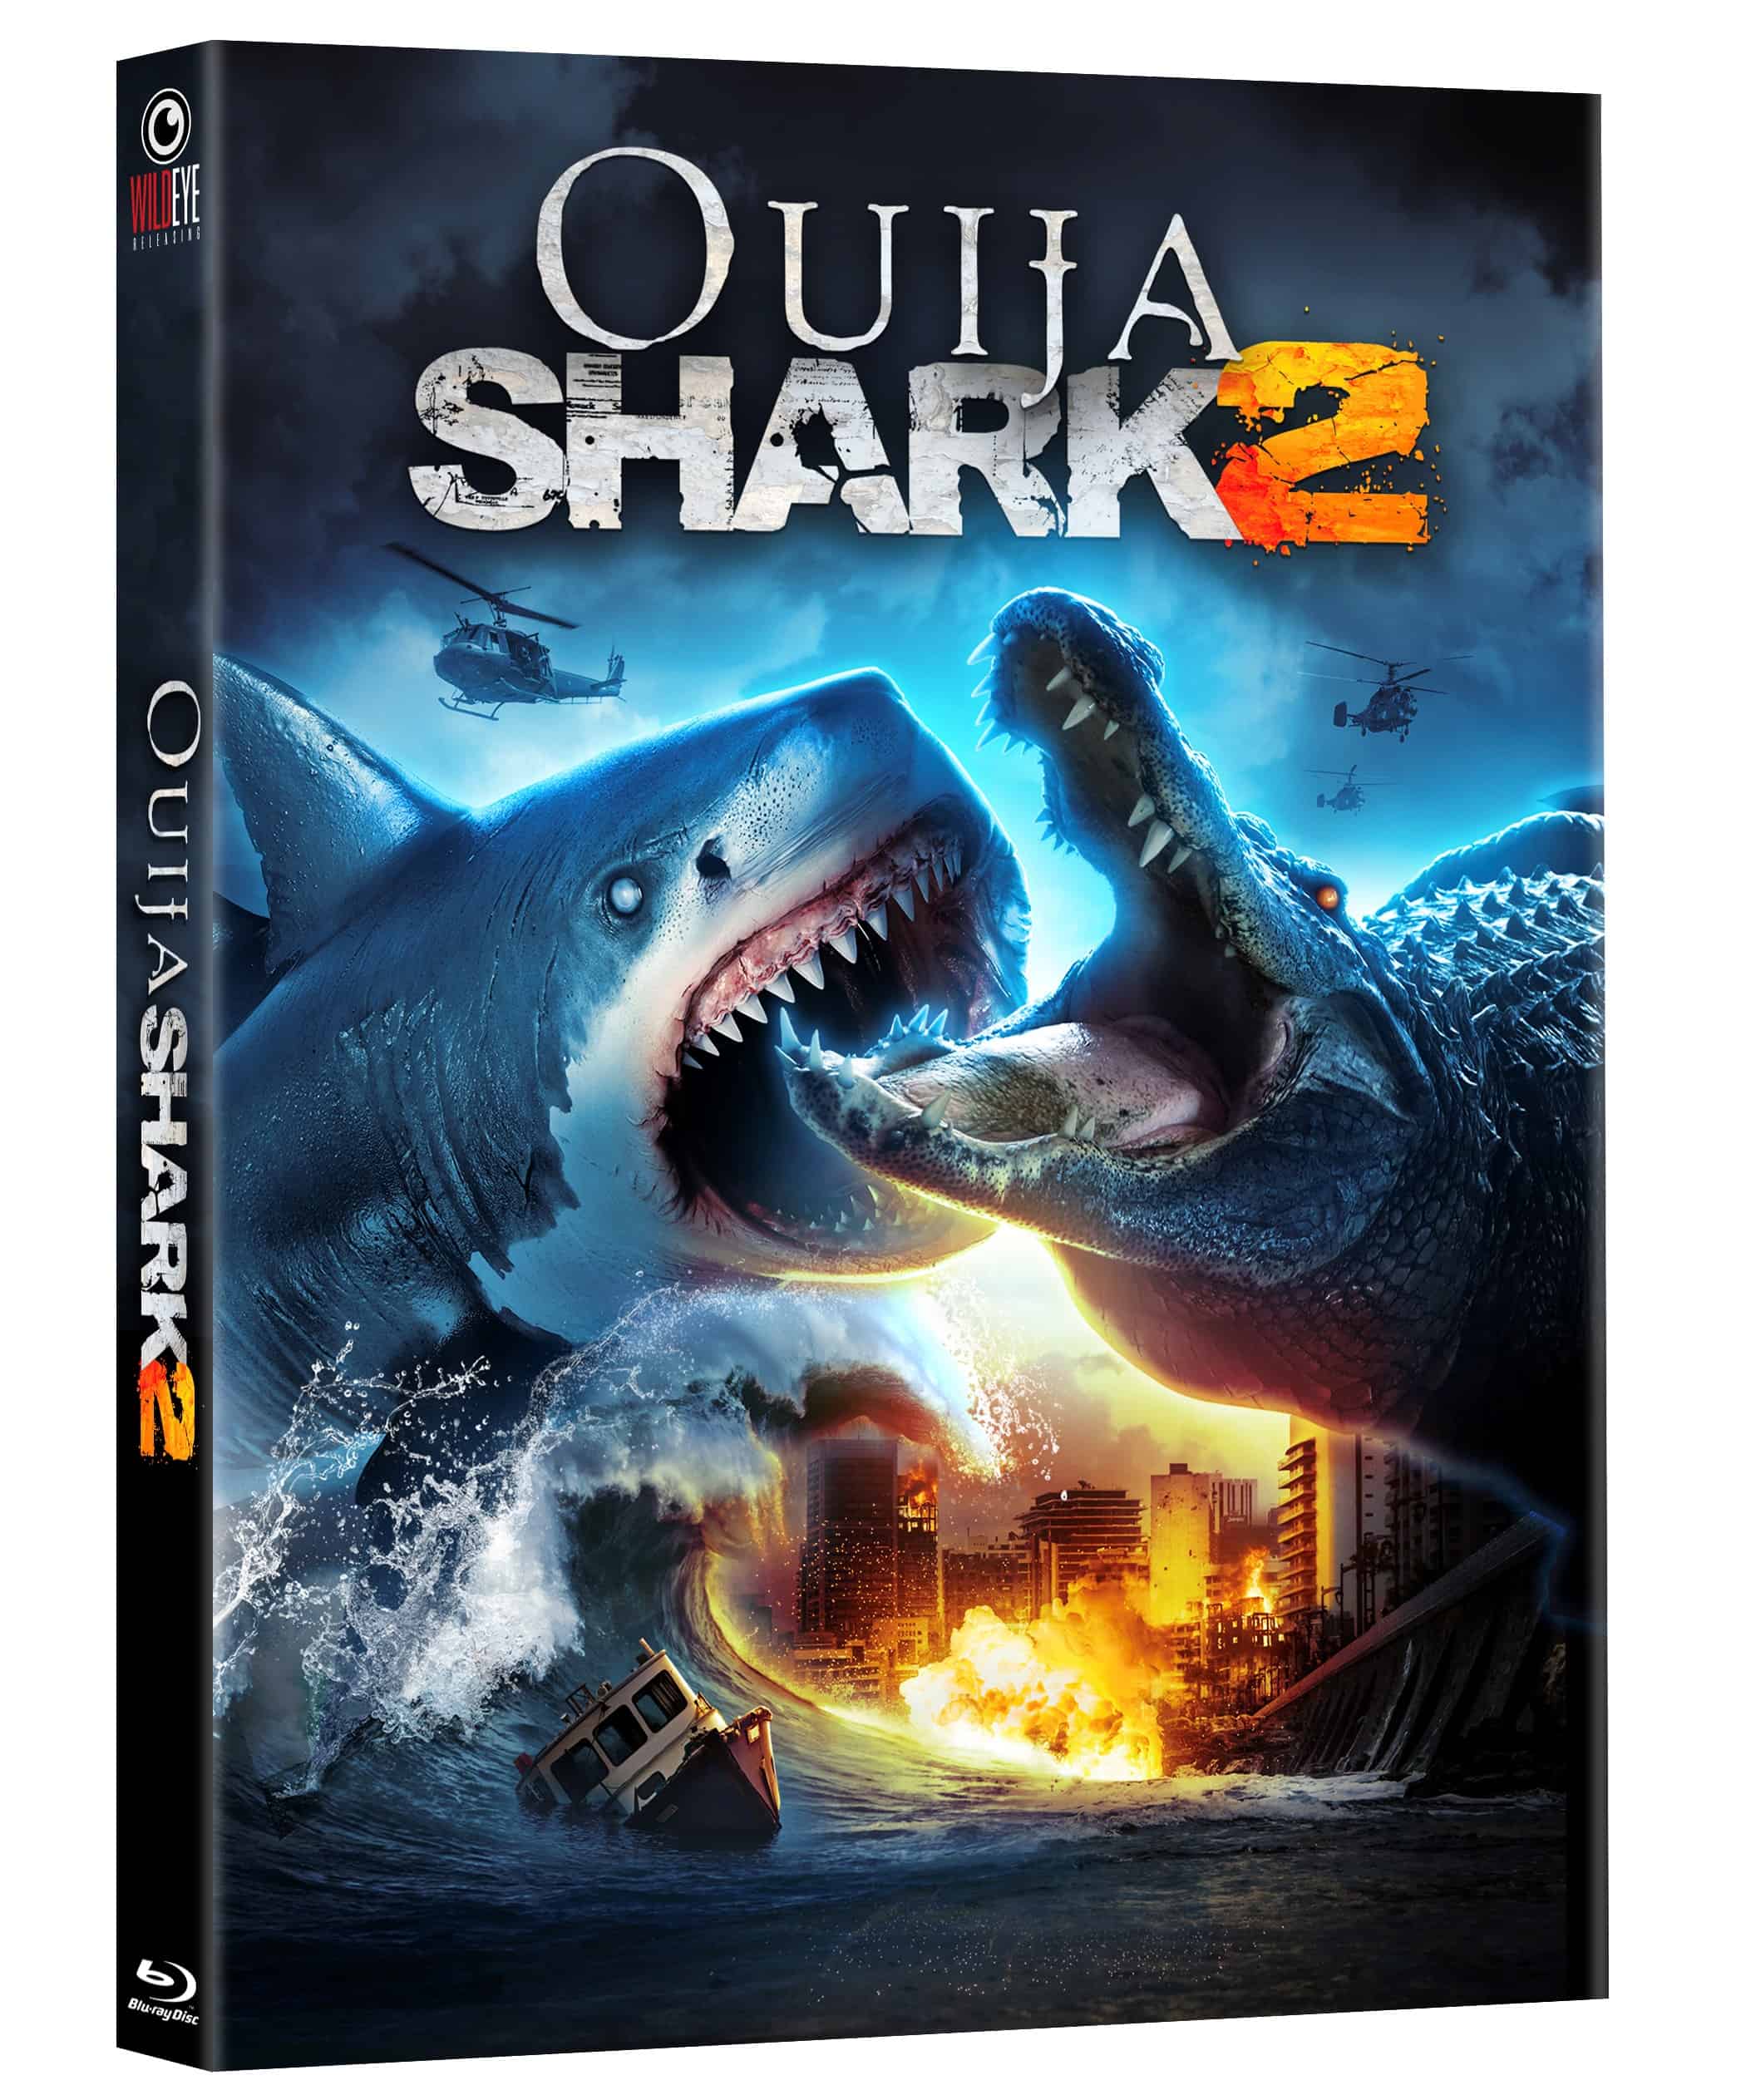 Wild Eye Releasing Announces Digital and Blu-Ray Release of Director John Migliore's OUIJA SHARK 2 19